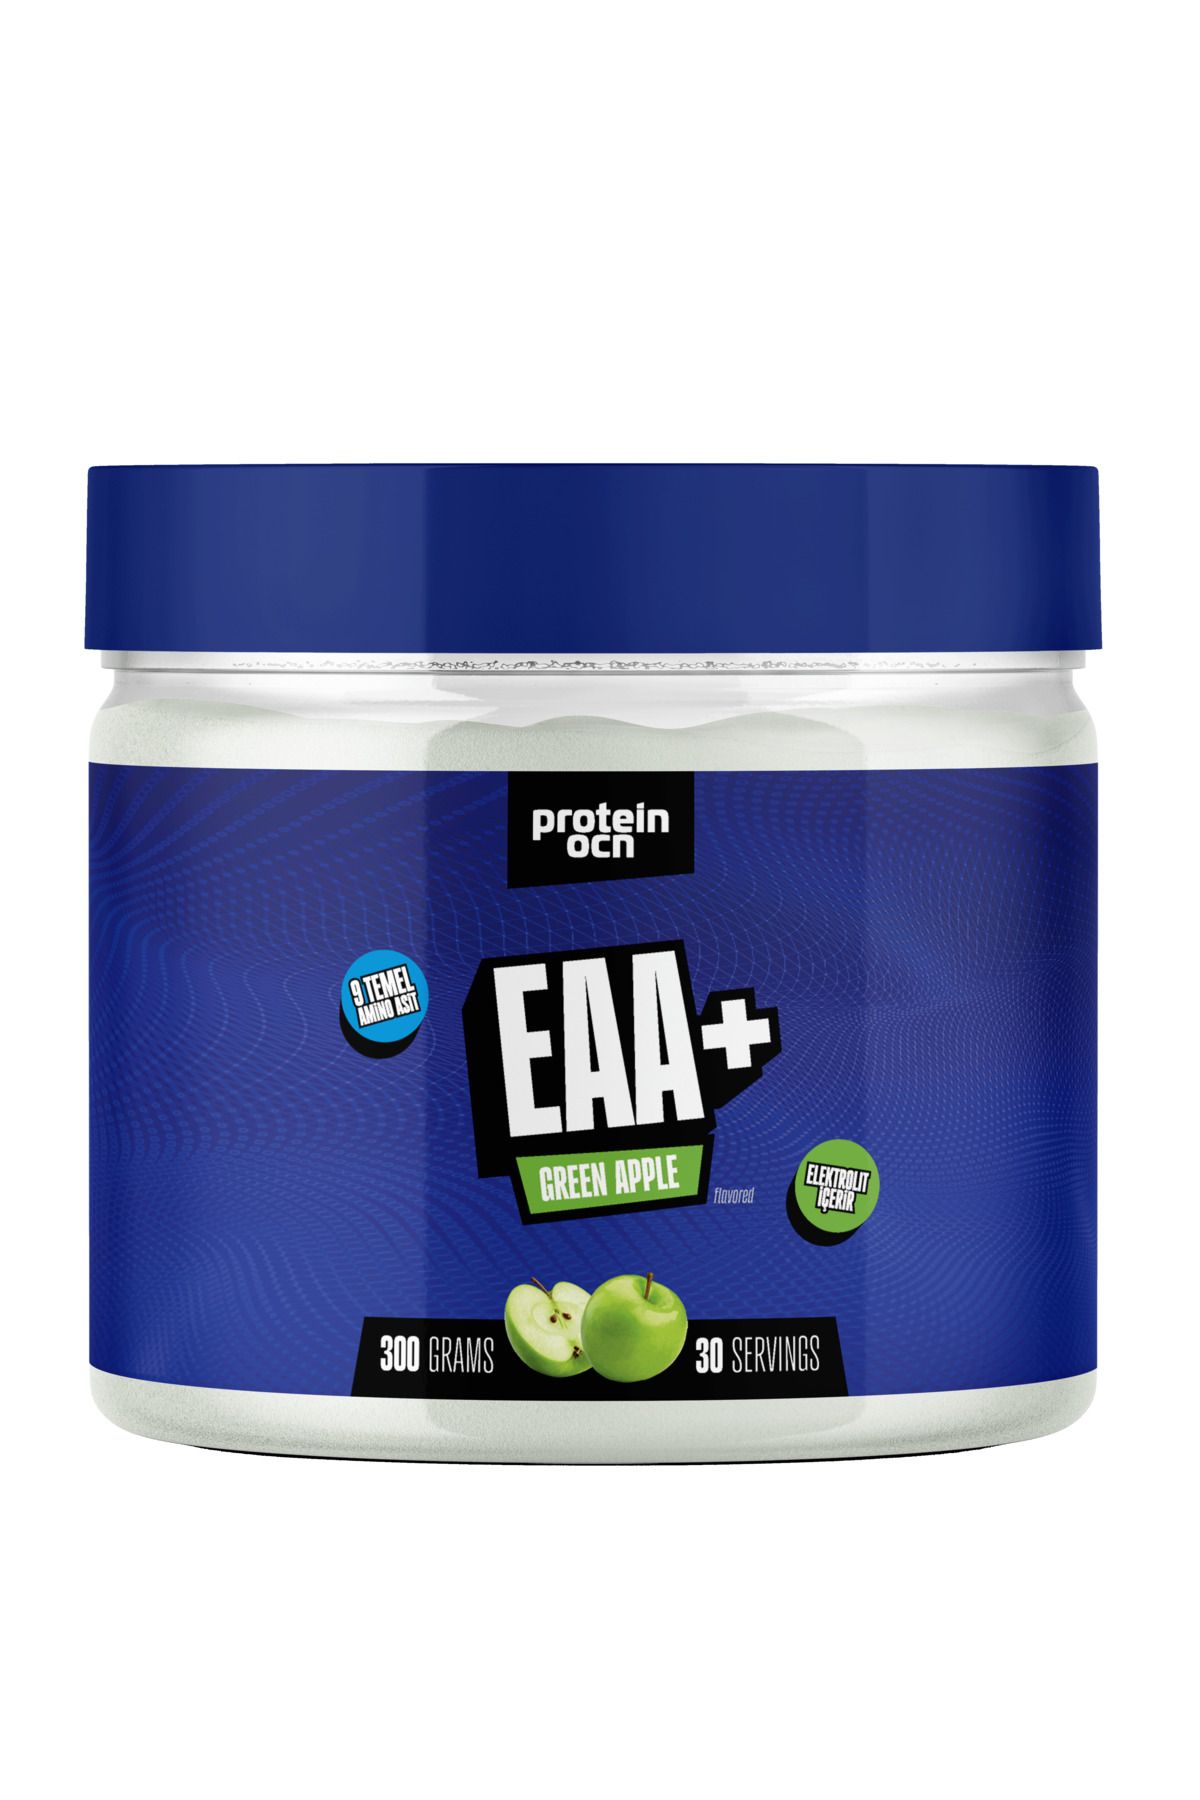 Proteinocean EAA+ - Yeşil Elma - 300g - 30 Servis